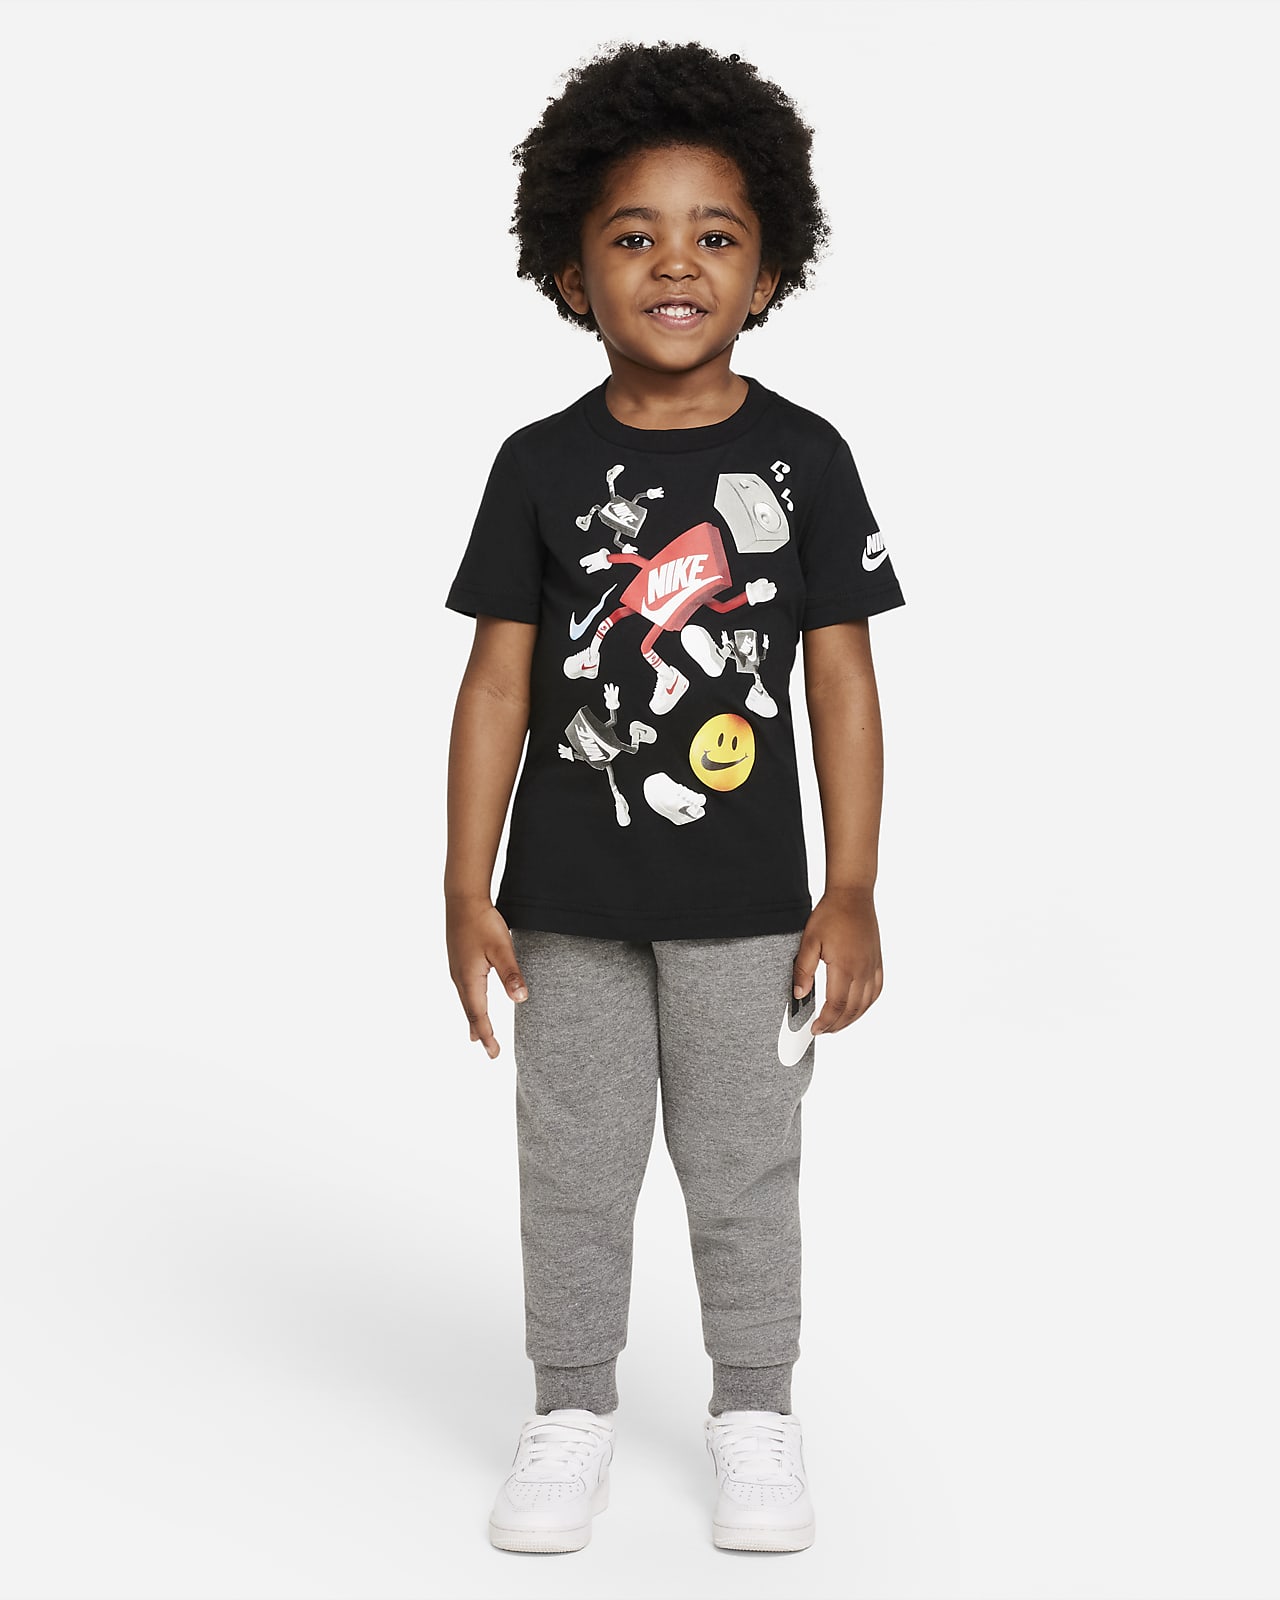 Wallzilla Jr. | Toddler T-Shirt 2T